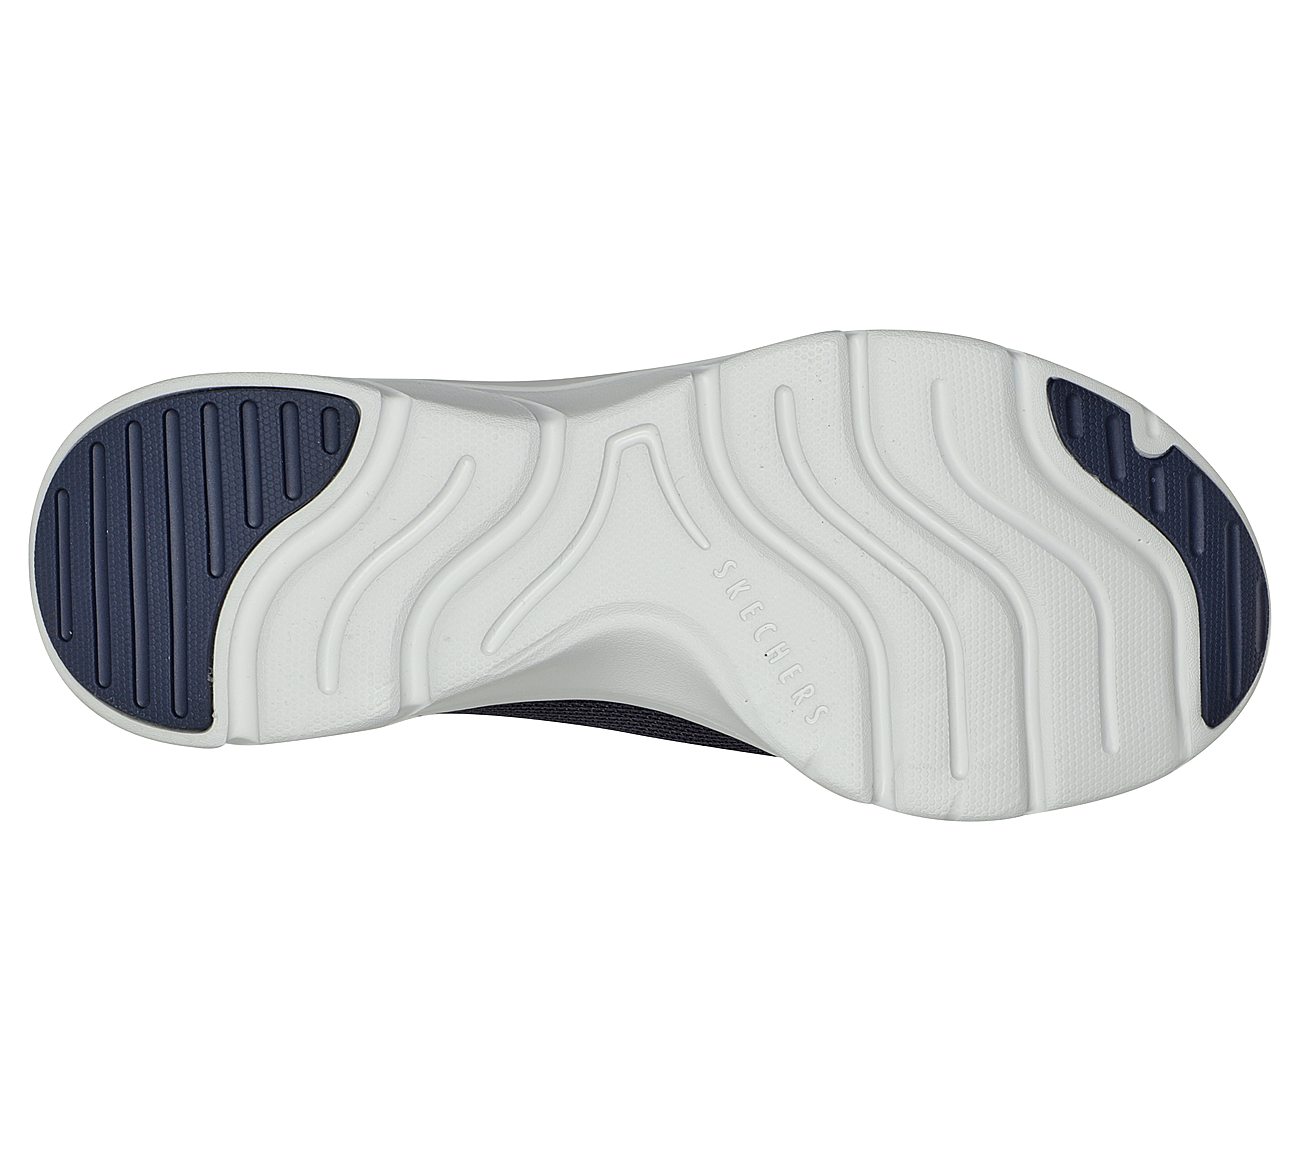 D'LUX COMFORT - BLISS GALORE, NAVY/PURPLE Footwear Bottom View